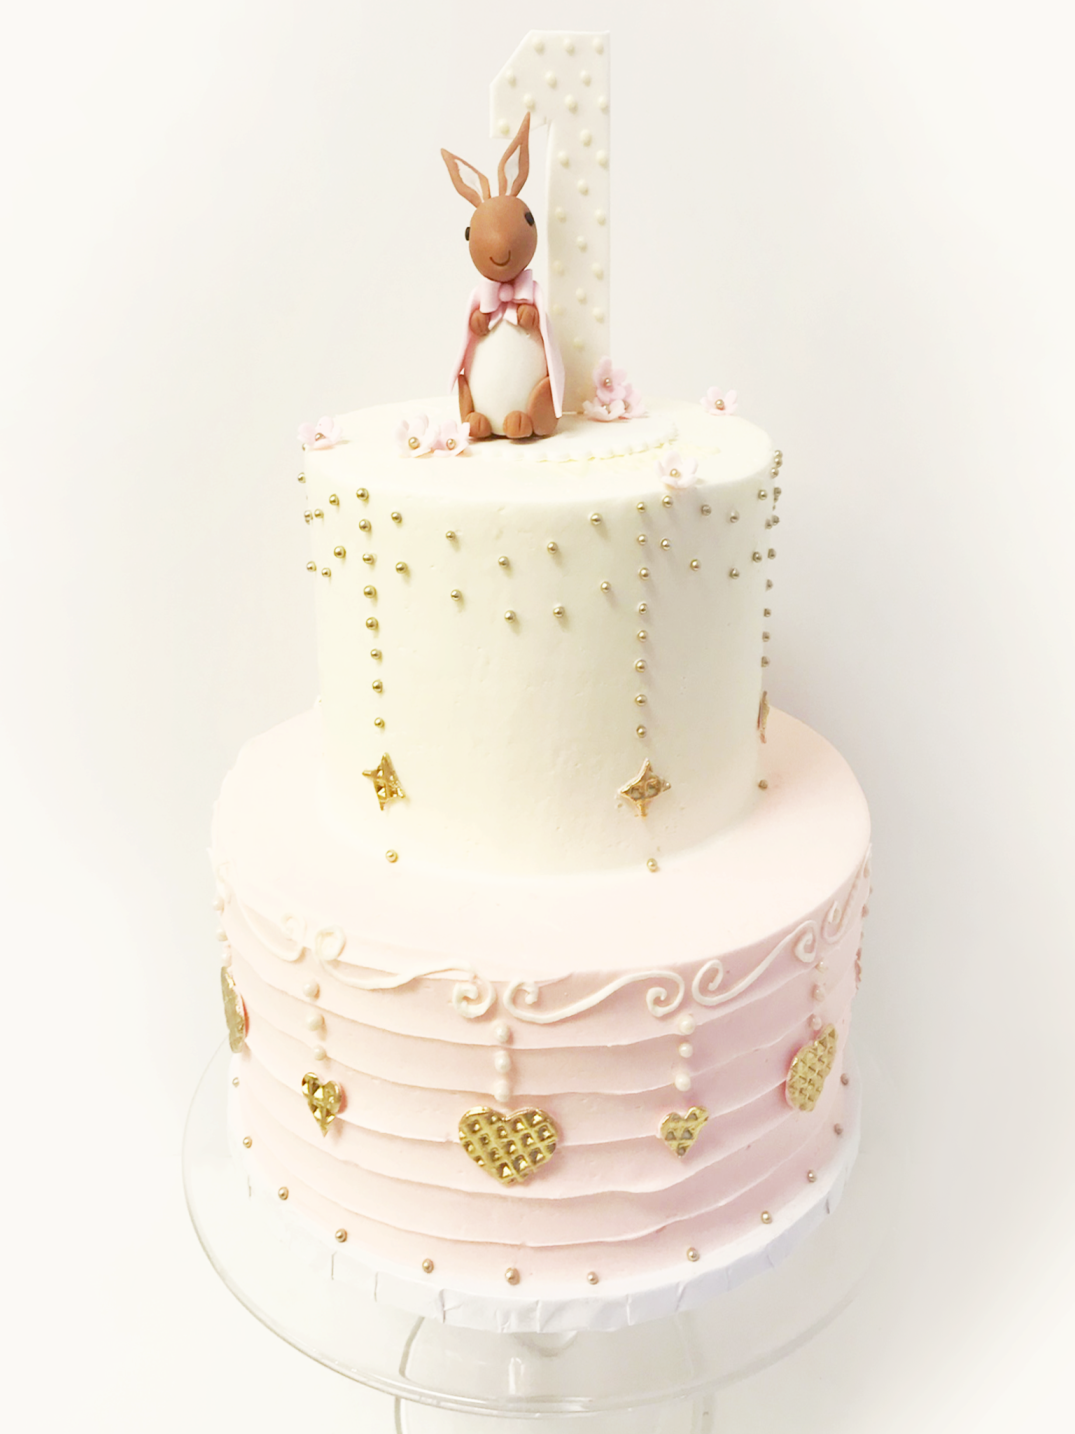 Whippt Desserts - bunny cake